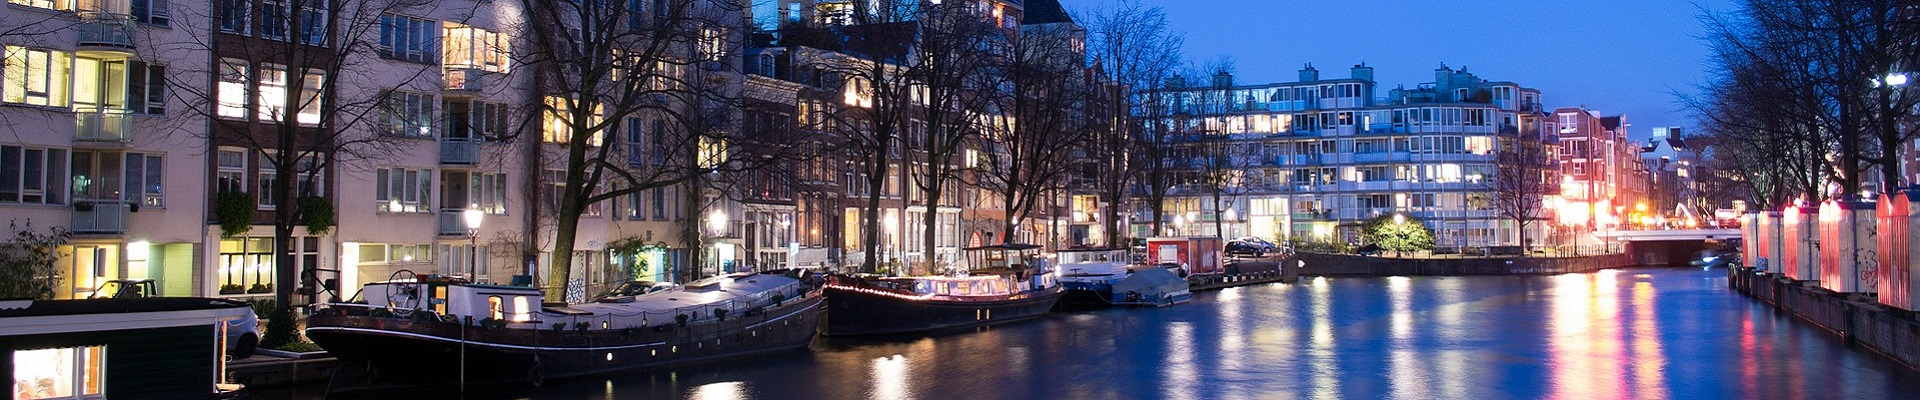 阿姆斯特丹河景